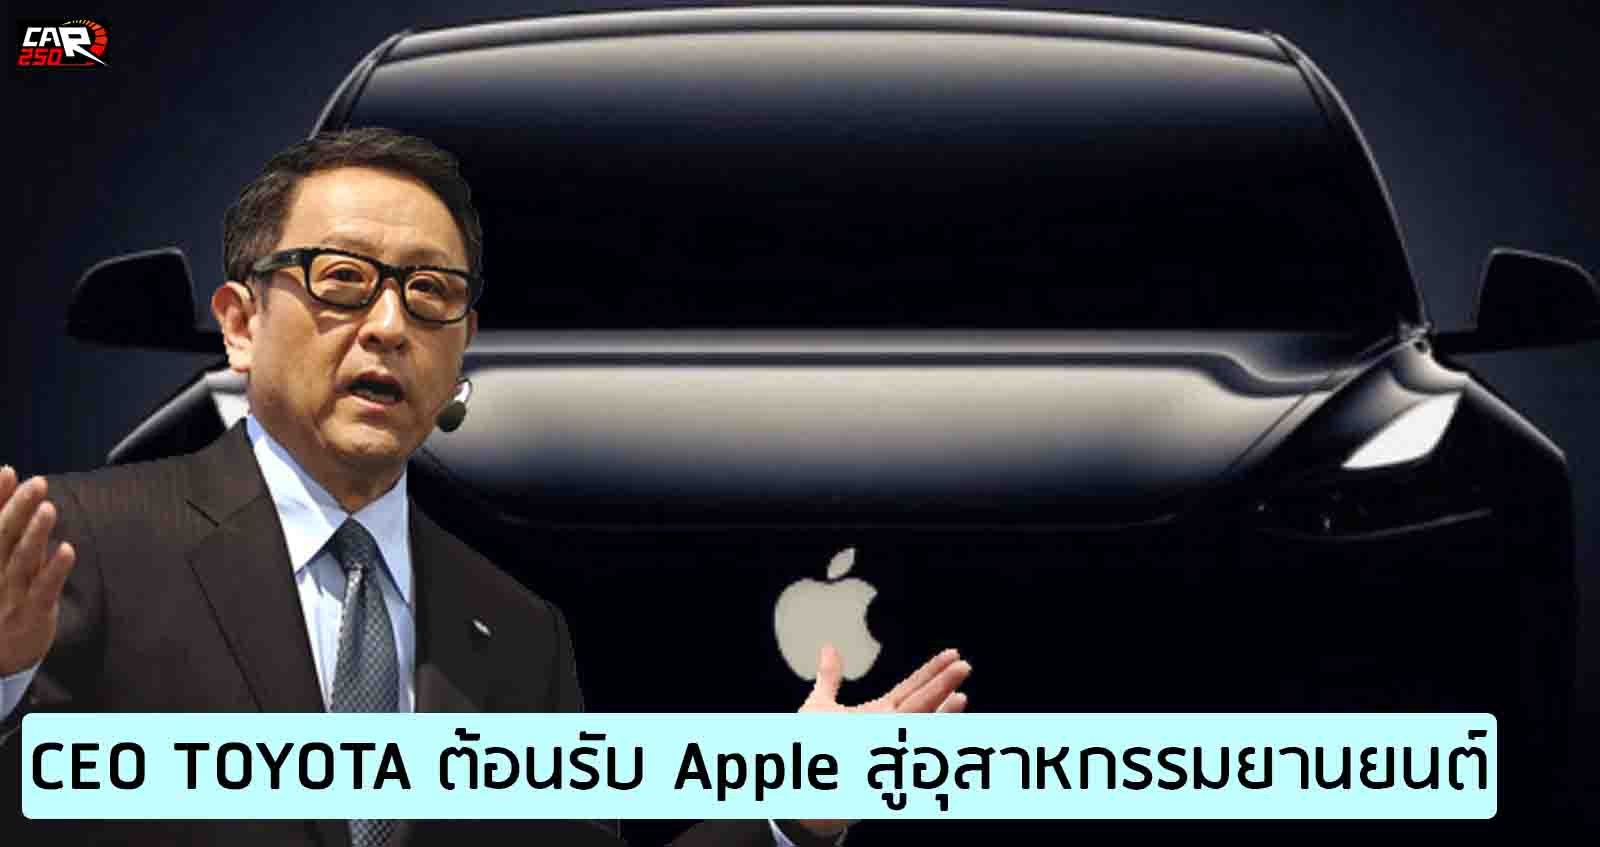 Akio Toyoda กล่าว ยินดีต้อนรับ Apple เข้าสู่อุสาหกรรมยานยนต์ และ ต้องเตรียมพร้อม การเปลี่ยนแปลงมากมายในอีก 40 ปีข้างหน้า